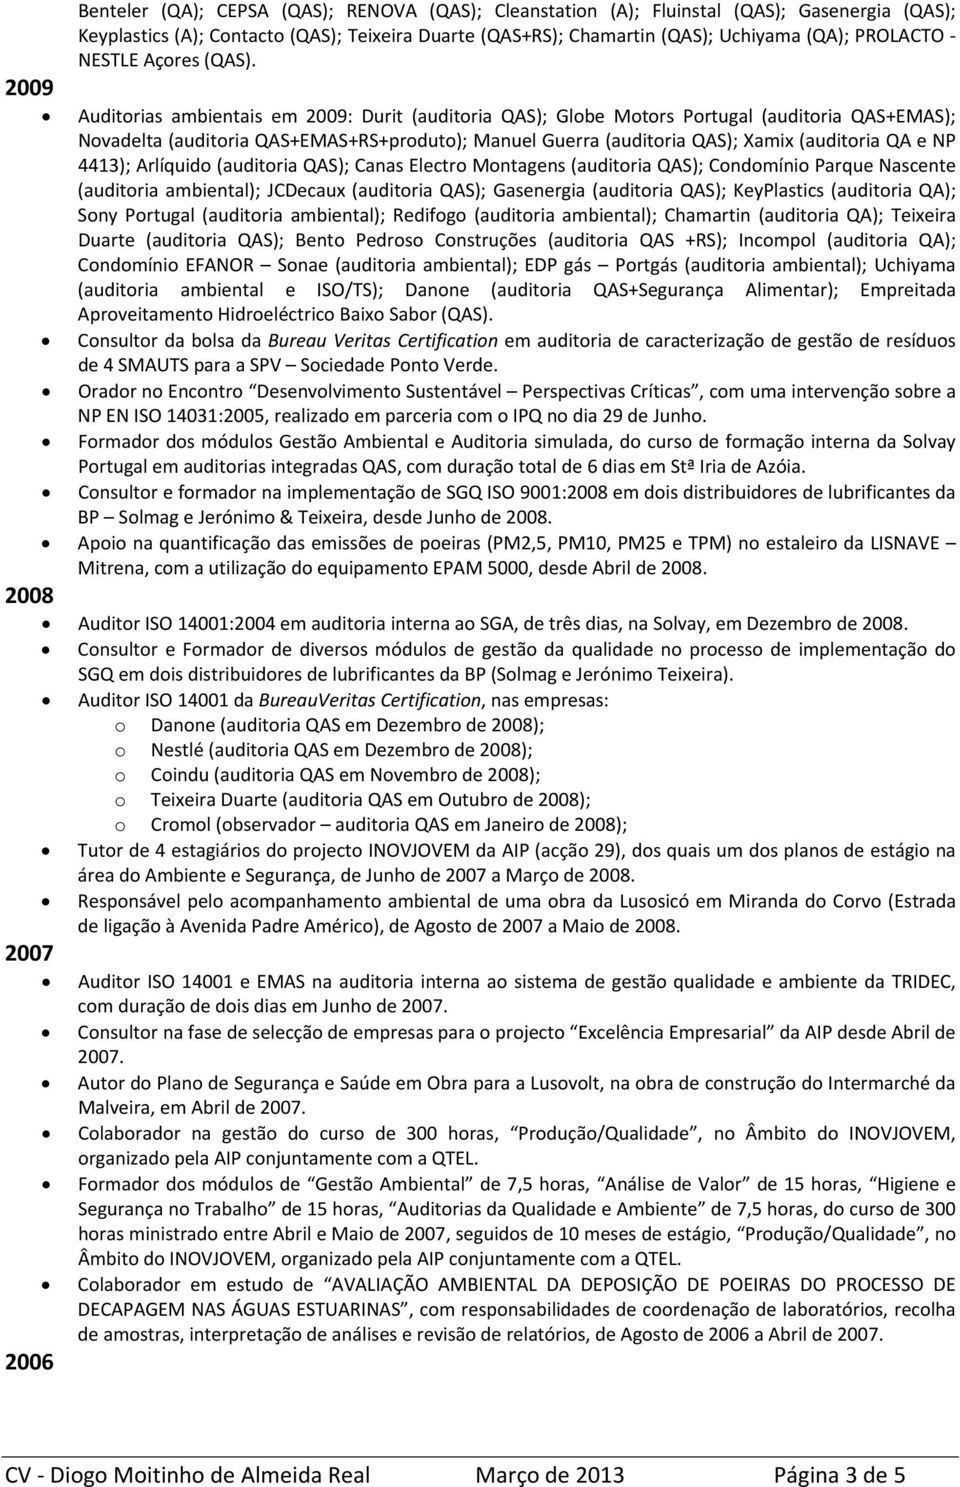 Auditorias ambientais em 2009: Durit (auditoria QAS); Globe Motors Portugal (auditoria QAS+EMAS); Novadelta (auditoria QAS+EMAS+RS+produto); Manuel Guerra (auditoria QAS); Xamix (auditoria QA e NP